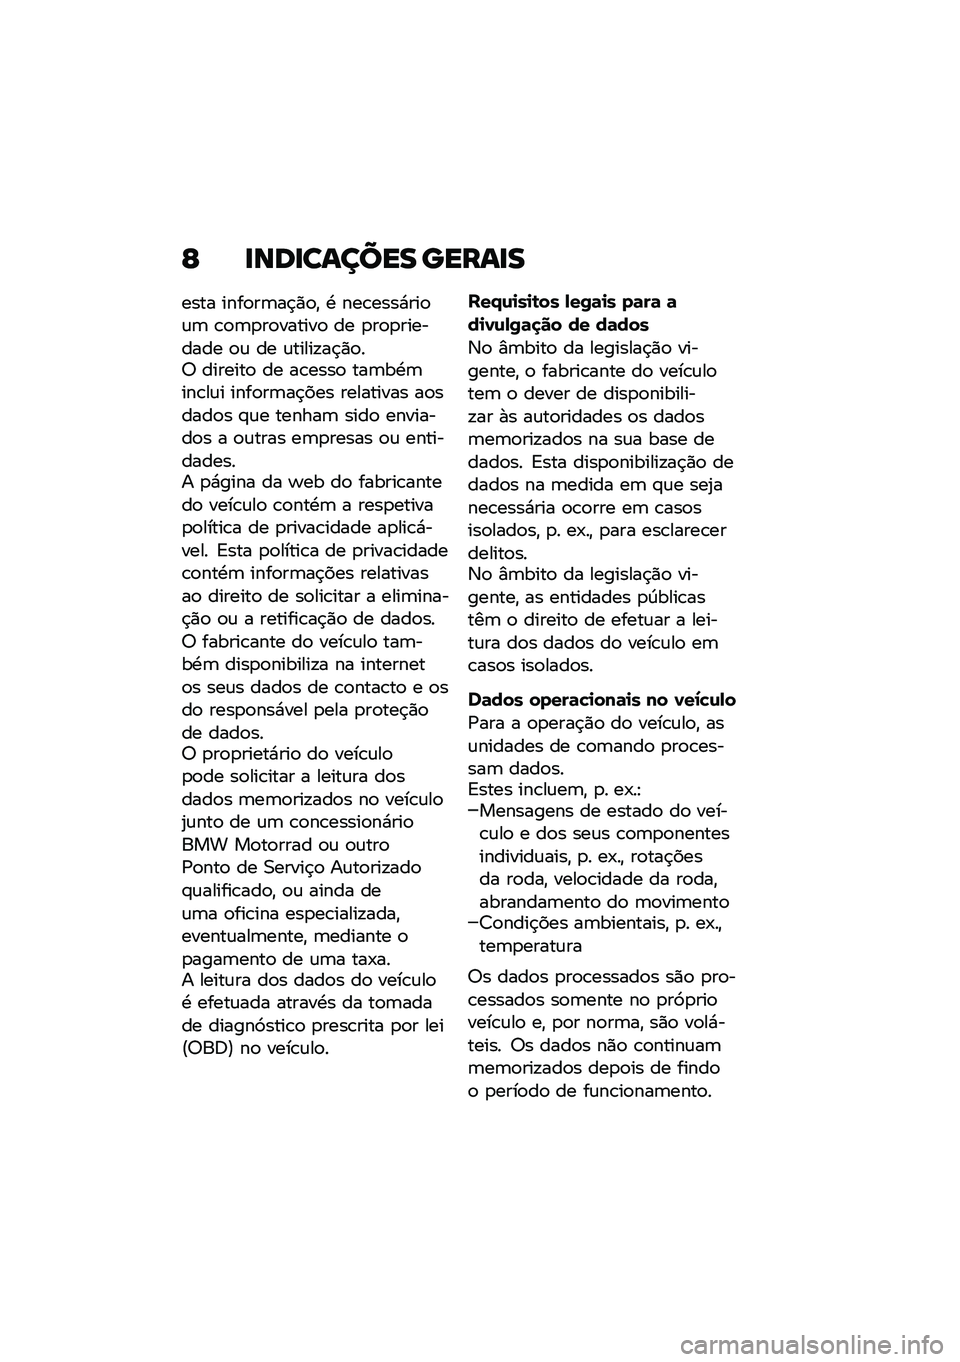 BMW MOTORRAD C 400 GT 2020  Manual do condutor (in Portuguese) �C �
���
������ �����
�
���� ����
��	��$�)�
�" �. ���\b����*���
�\f�	 �\b�
�	�
��
������
 �� �
��
�
�������� �
�\f �� �\f�����!��$�)�
��; ����